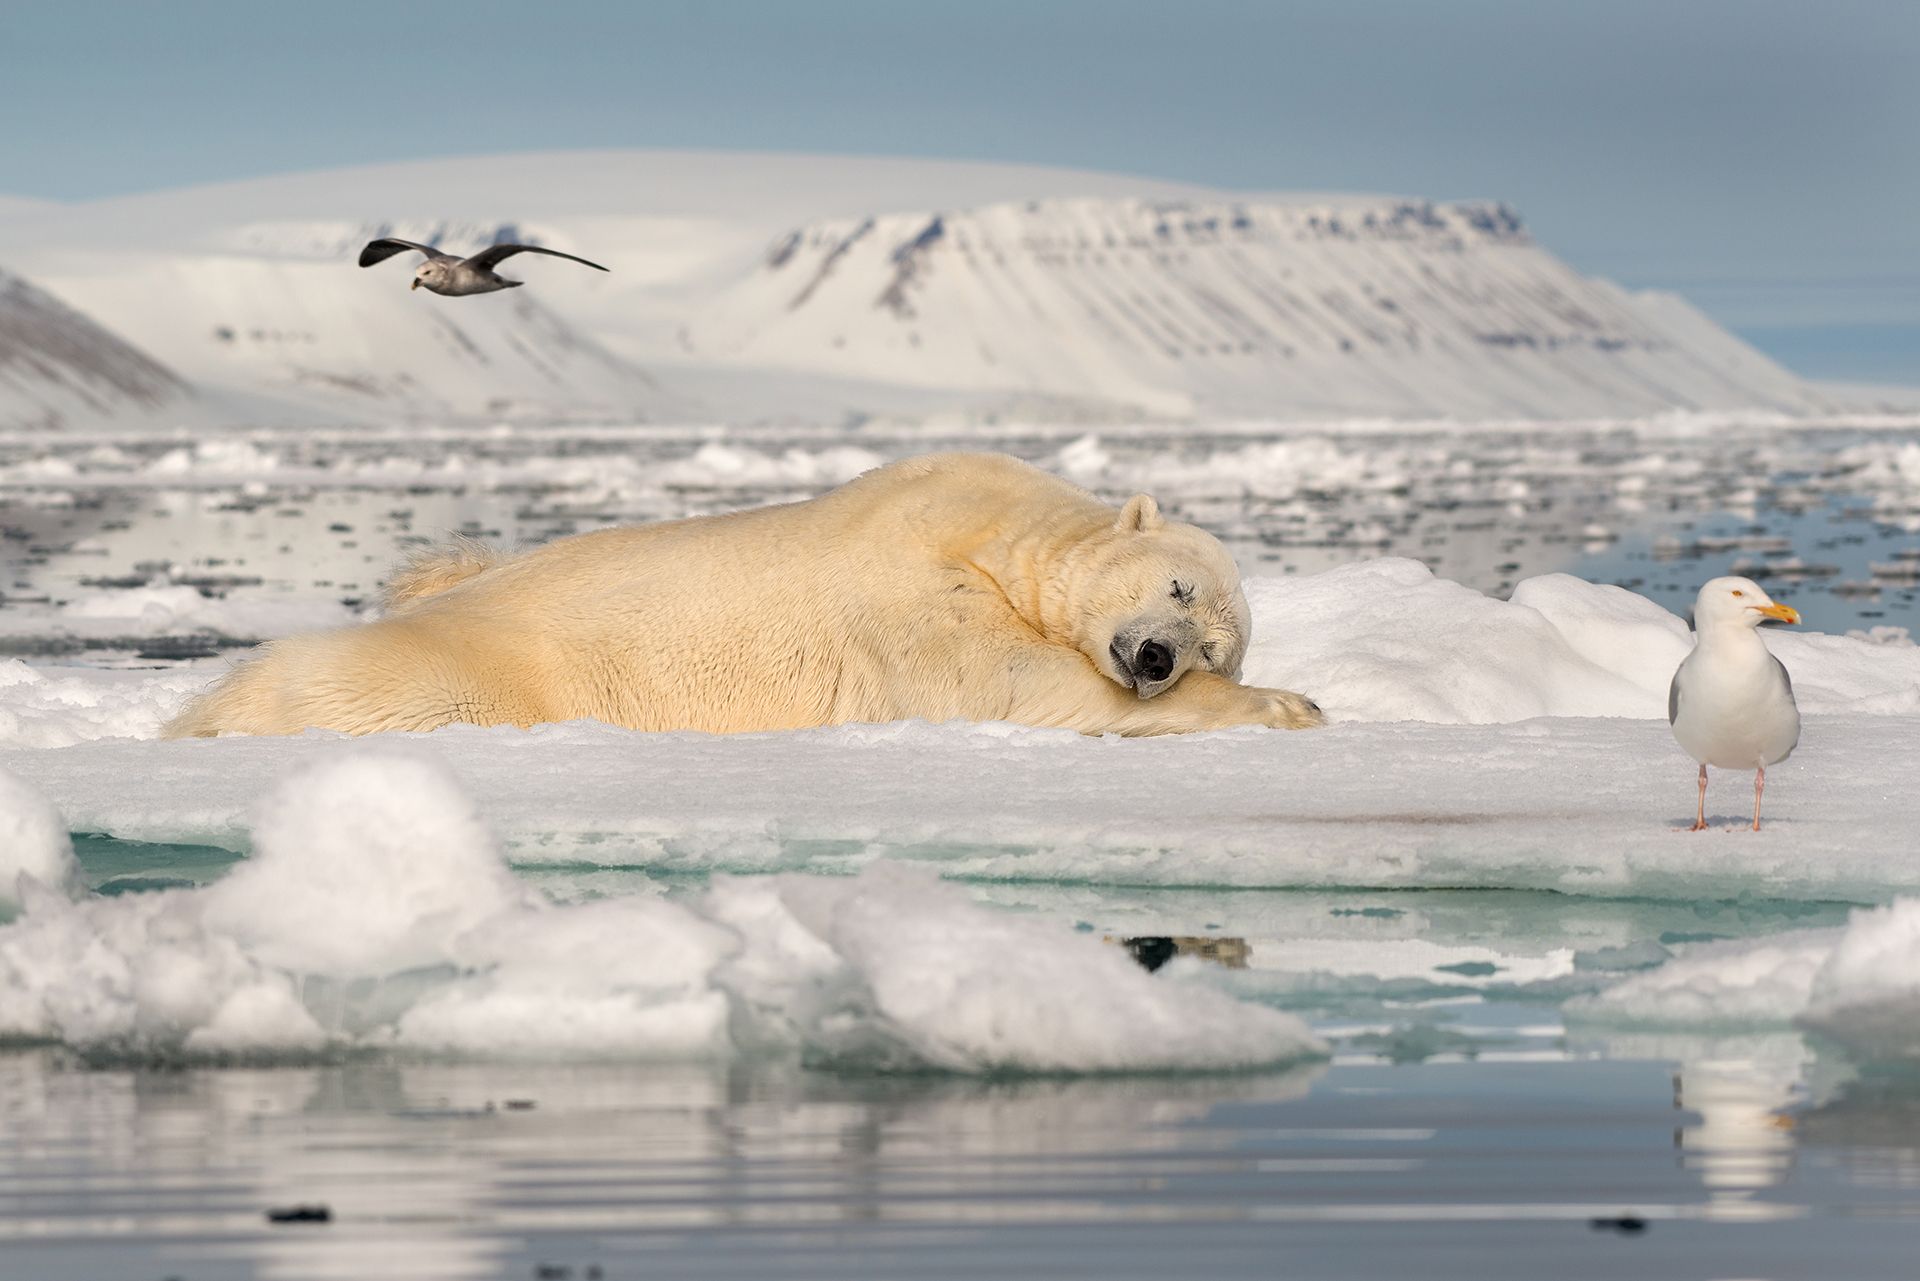 General 1920x1281 nature landscape water sea animals polar bears Antarctica birds snow ice sleeping reflection